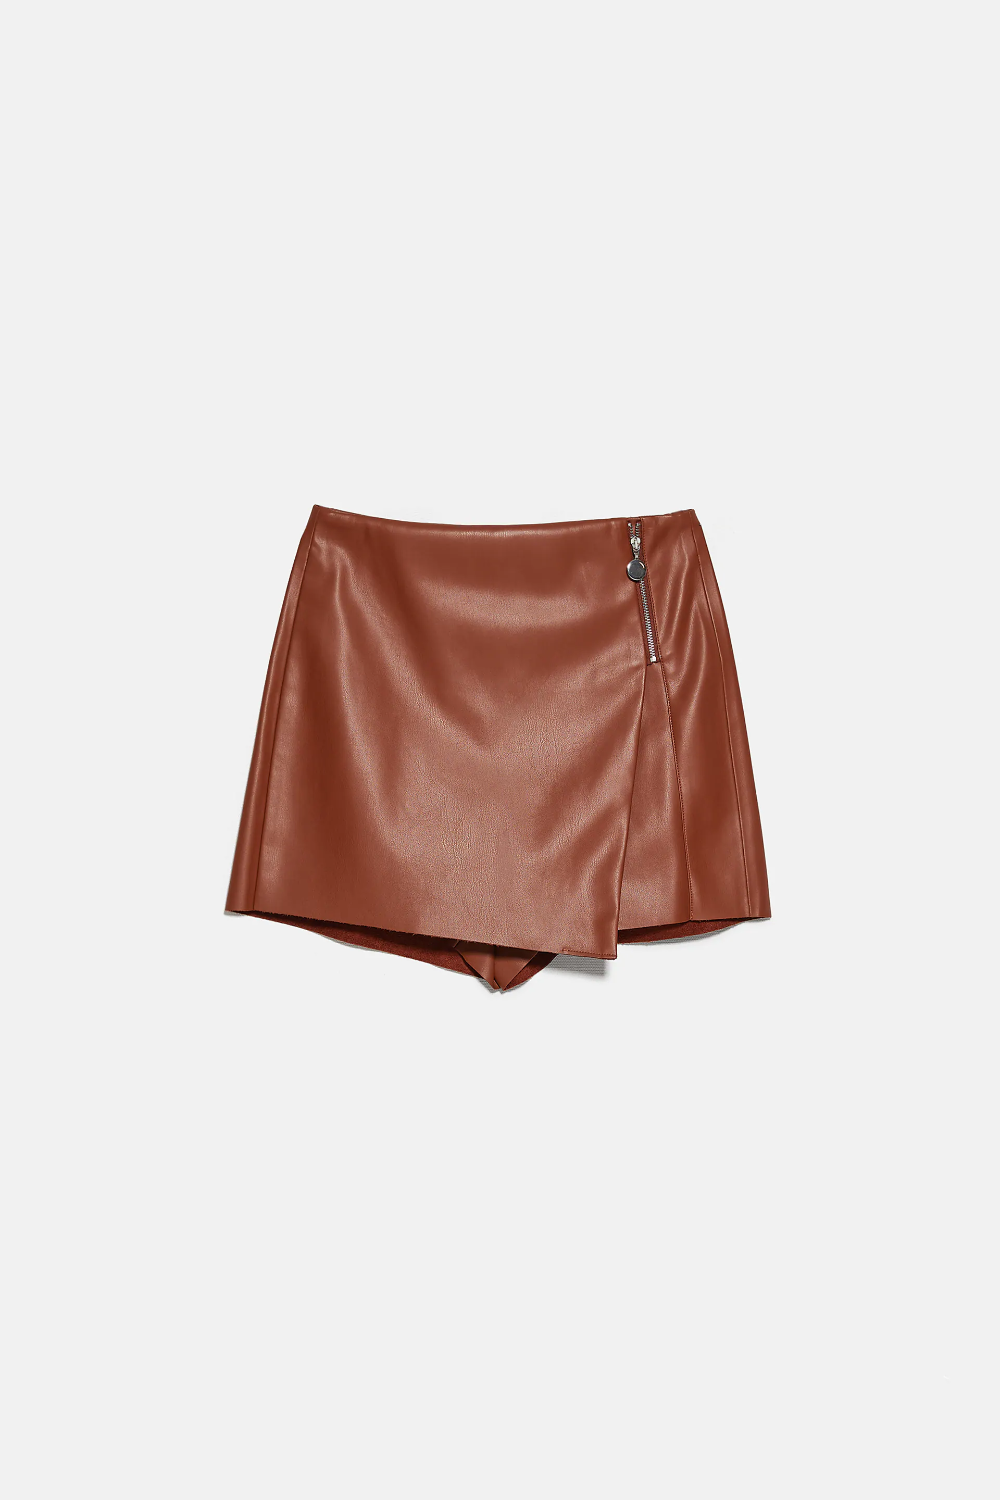 https://flyfiercefab.com/wp-content/uploads/2020/07/Zara-Cognac-Faux-Leather-Shorts.png